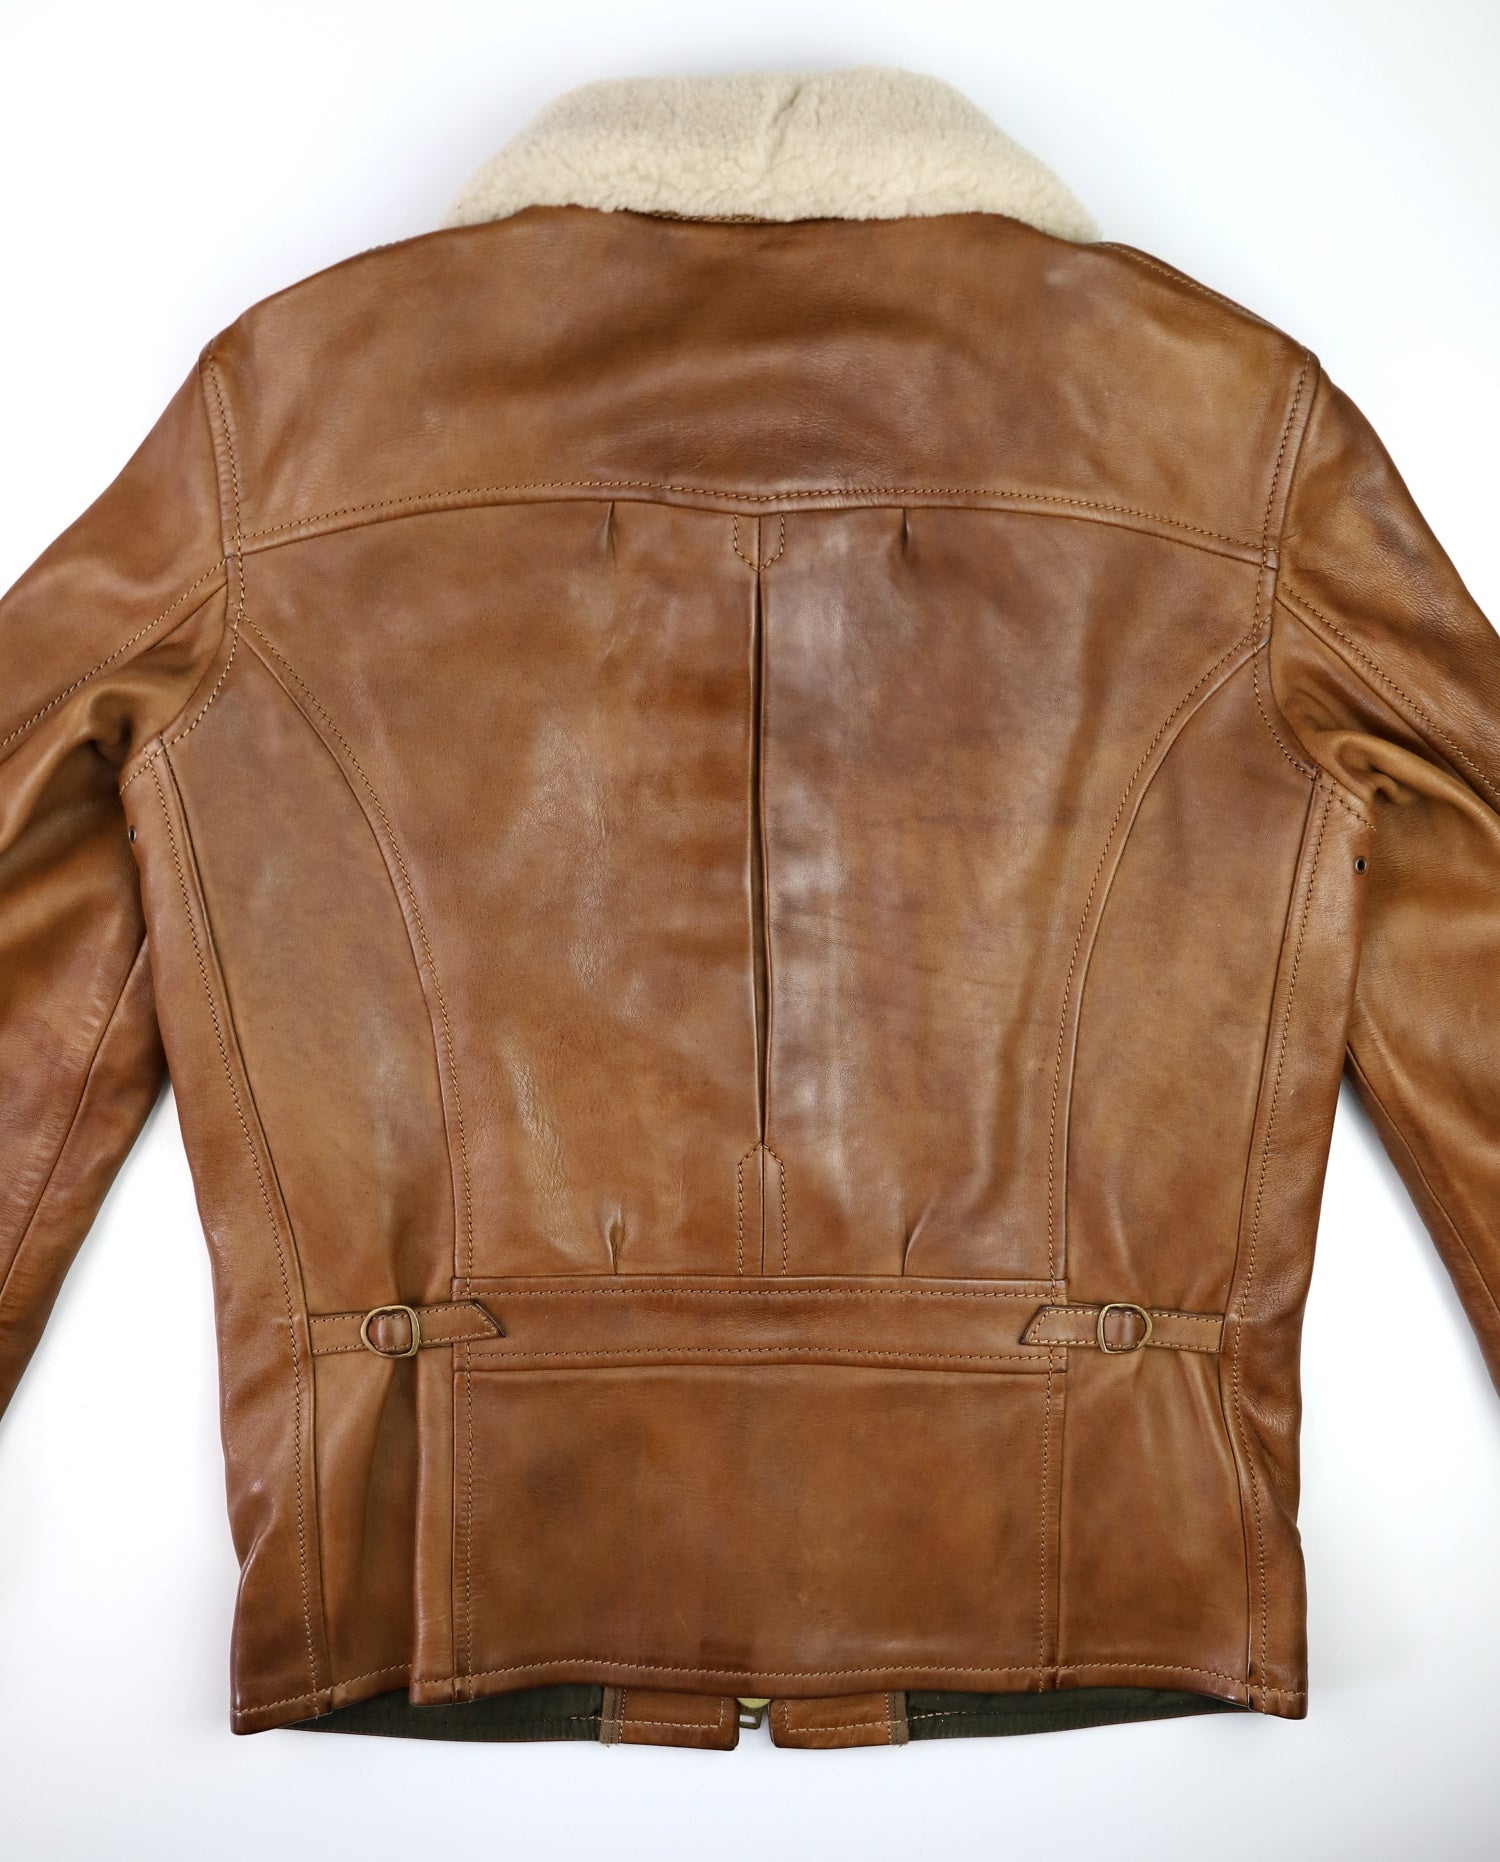 Thedi Memphis Jacket, size Small, Bruciato Horsehide